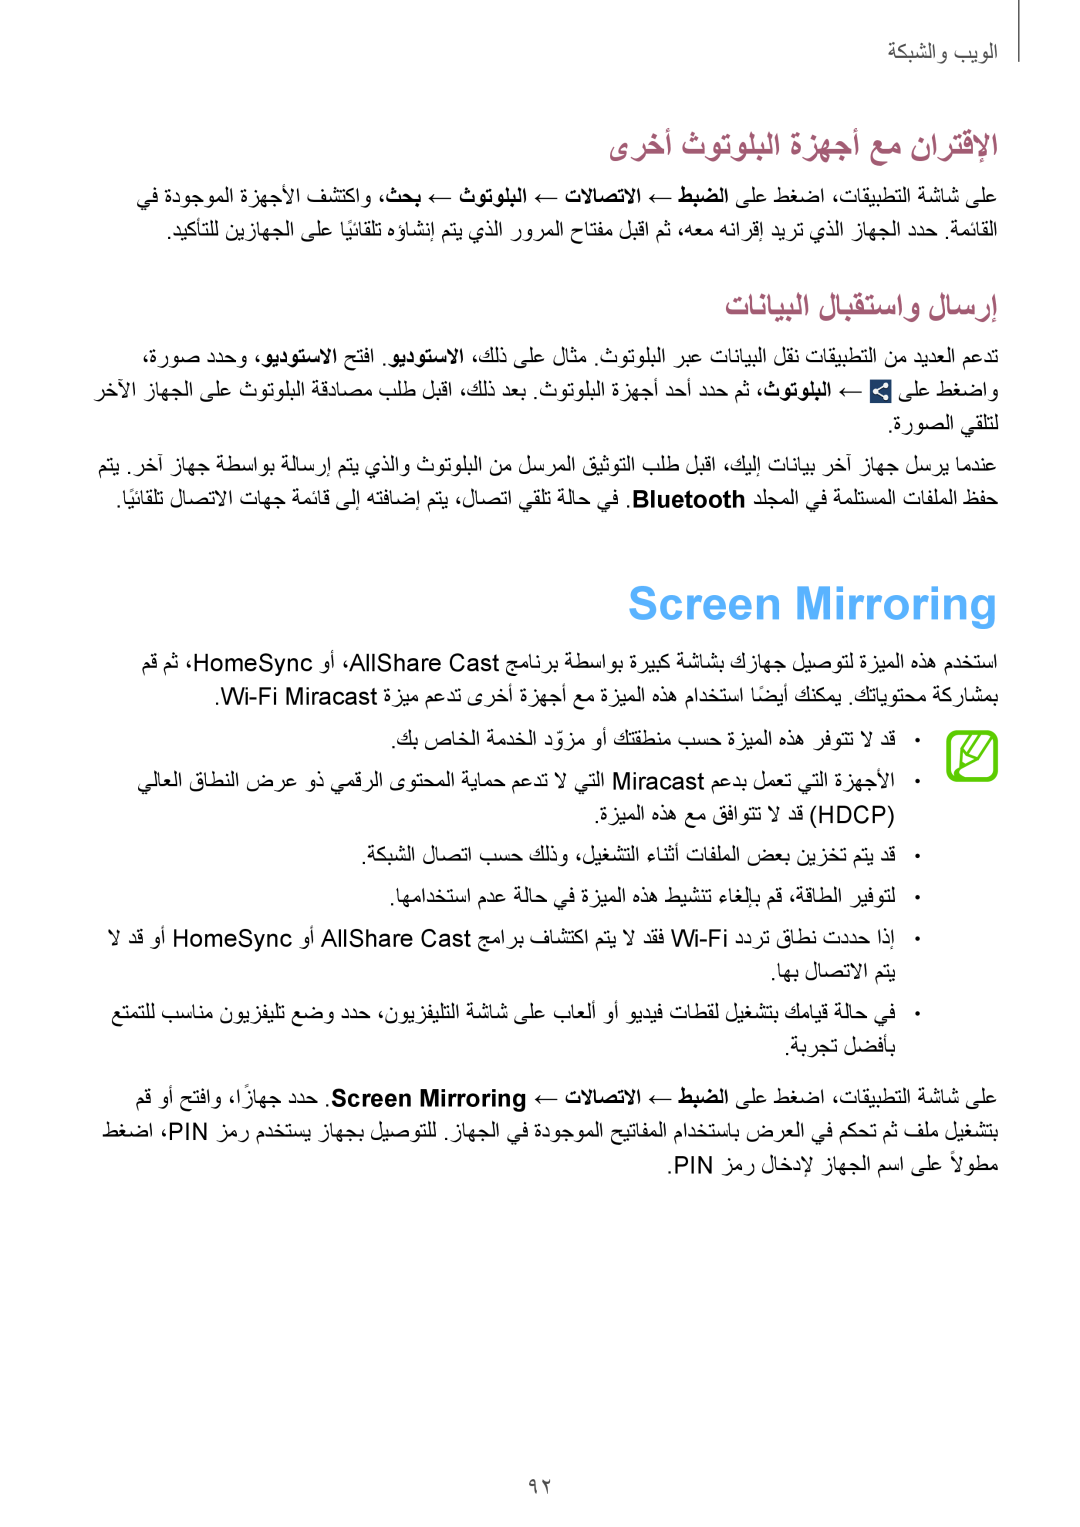 Samsung GT-I9515ZKAKSA manual Screen Mirroring, ىرخأ ثوتولبلا ةزهجأ عم نارتقلإا, تانايبلا لابقتساو لاسرإ, الويٜوالشٜ䌆 